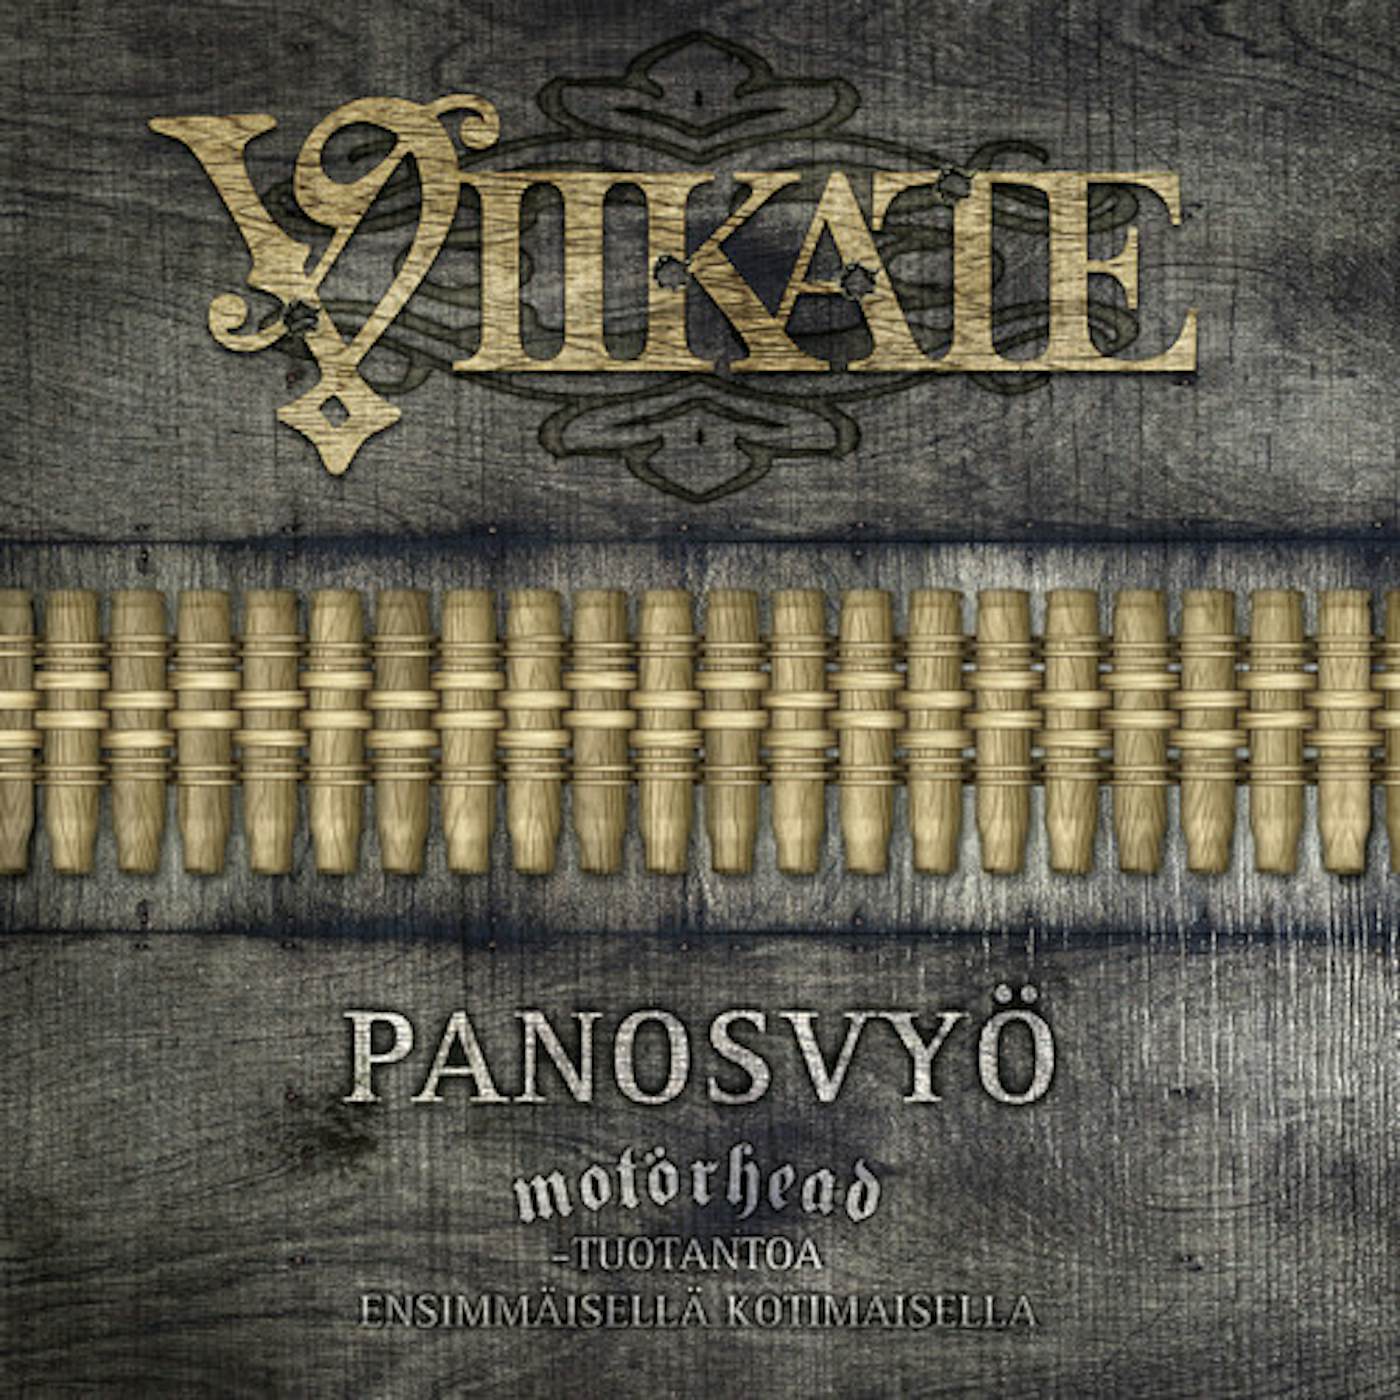 Viikate PANOSVYO Vinyl Record - Holland Release